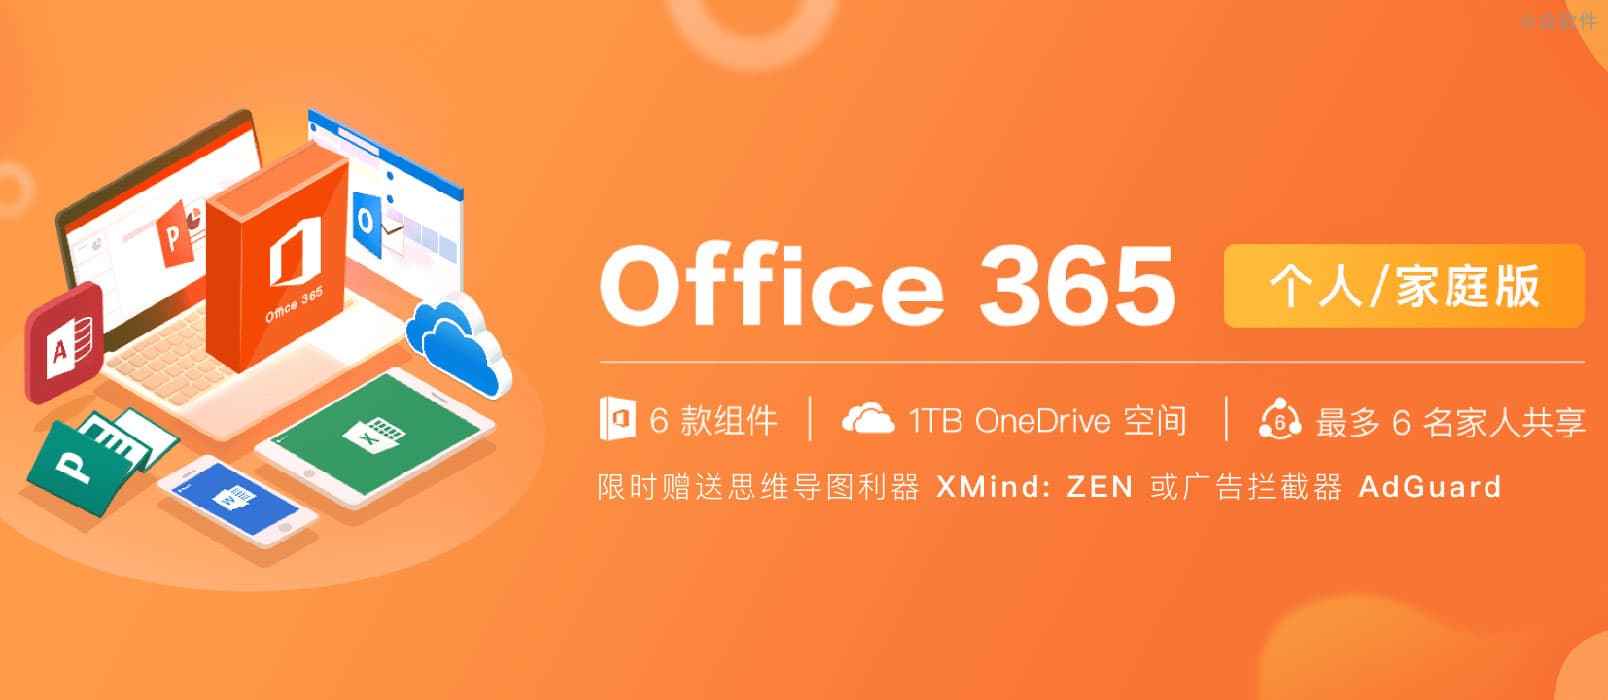 Office 365 个人/家庭版 5+ 折 特价，立即拥有正版 Word/Excel/PPT/Outlook